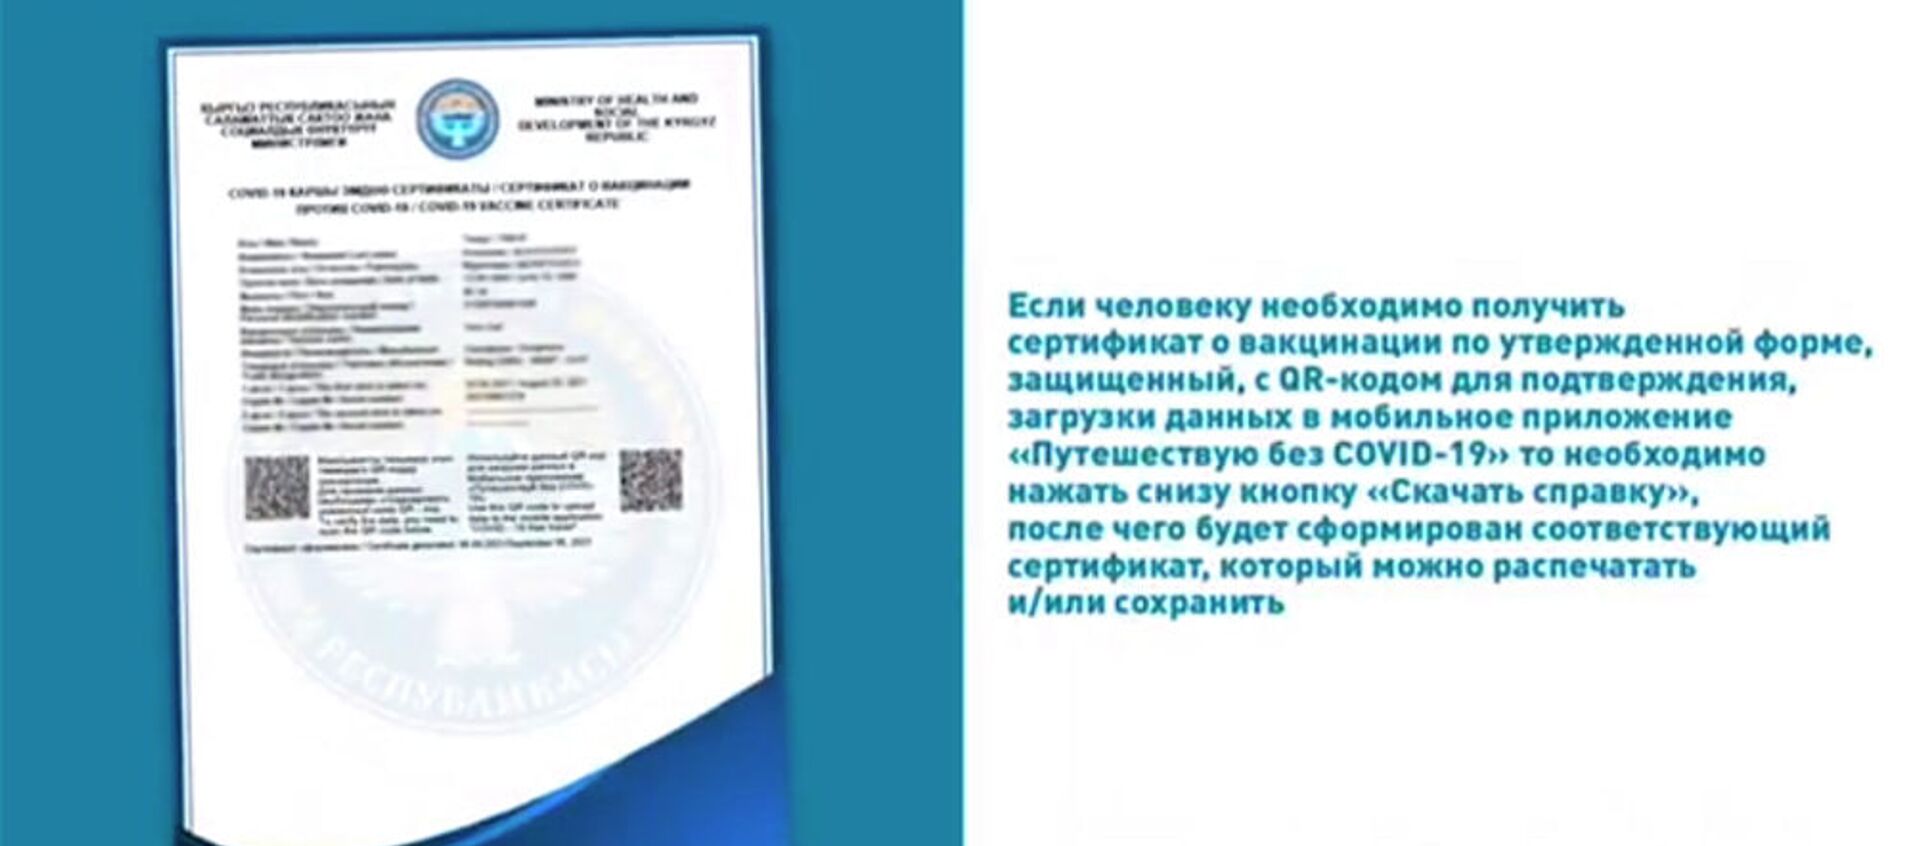 Как скачать сертификат о вакцинации от COVID — видеоинструкция Минздрава КР - Sputnik Кыргызстан, 1920, 09.09.2021